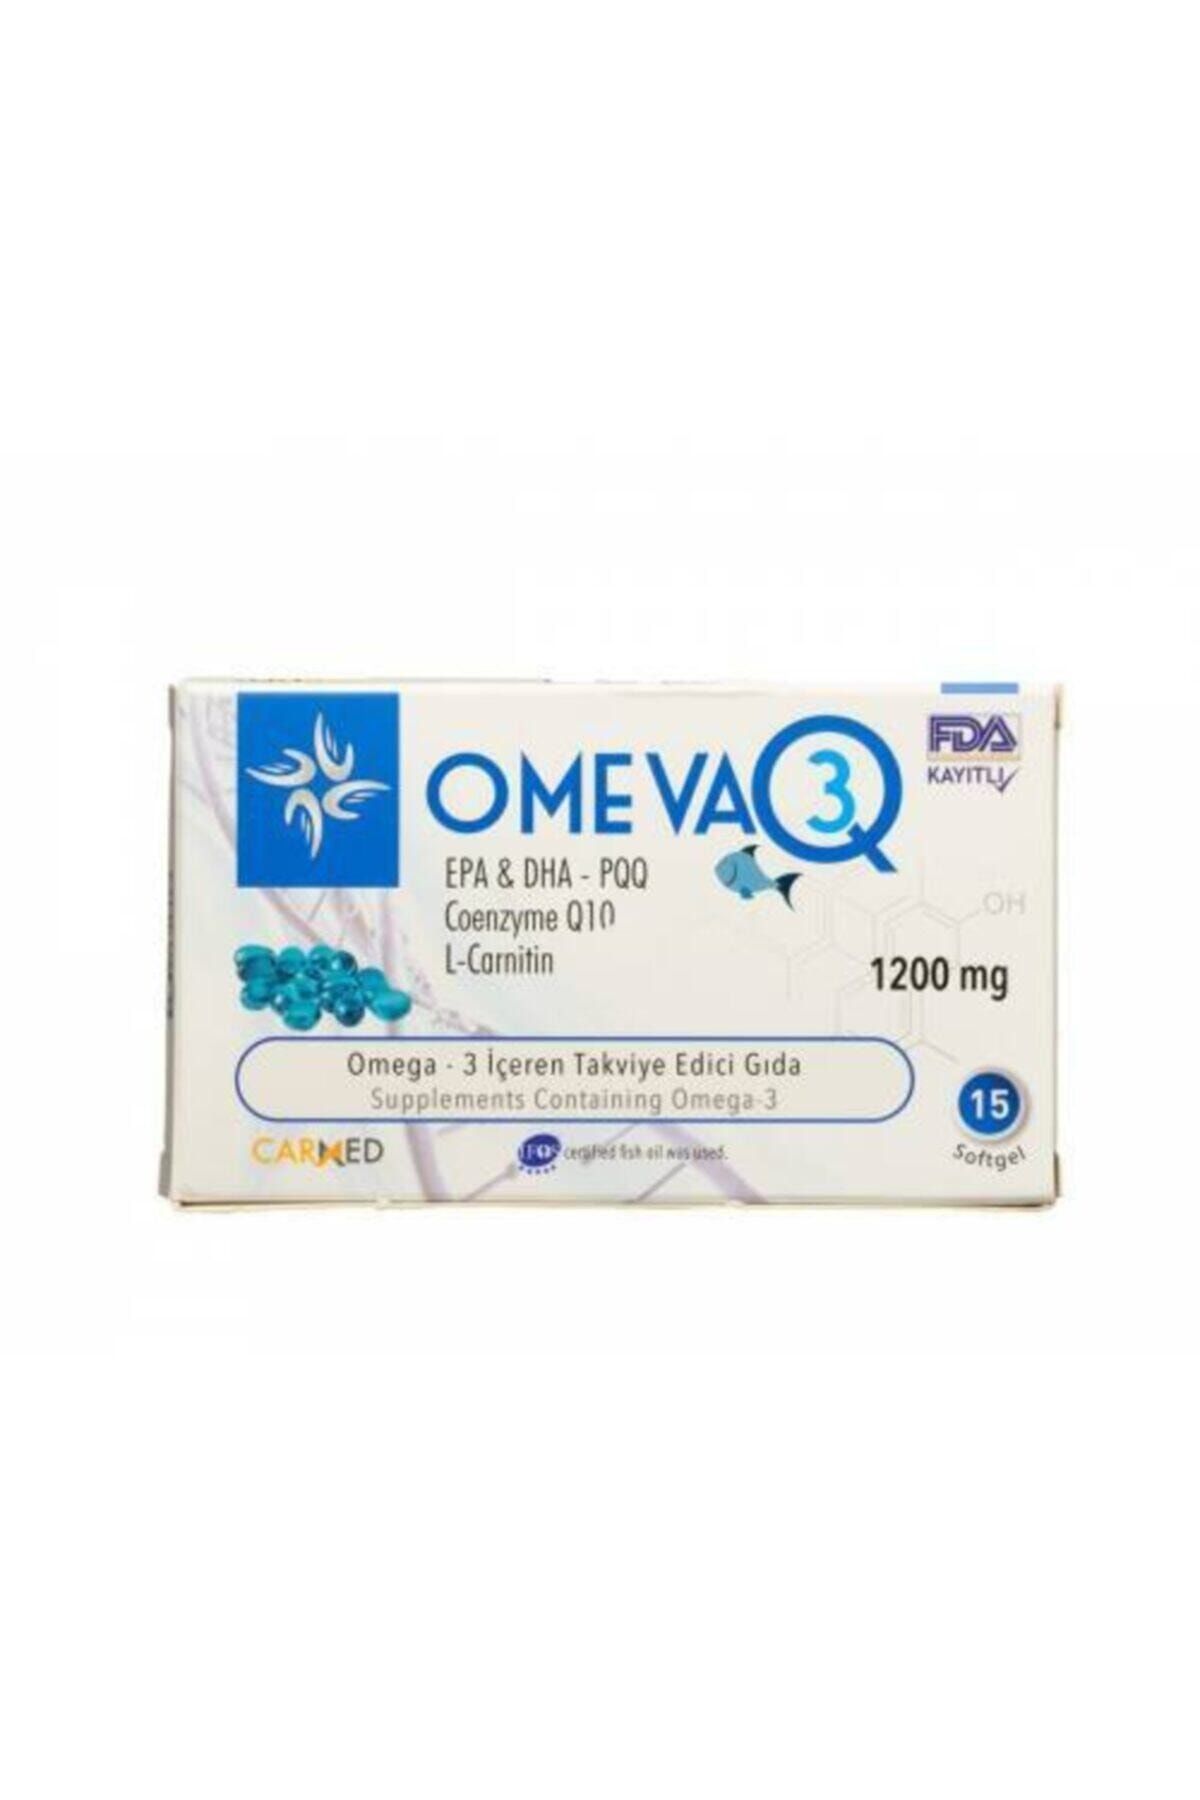 Vacrol Omevaq 3 30 Softgel  Karvakrol İçeren Takviye Edici Gıda